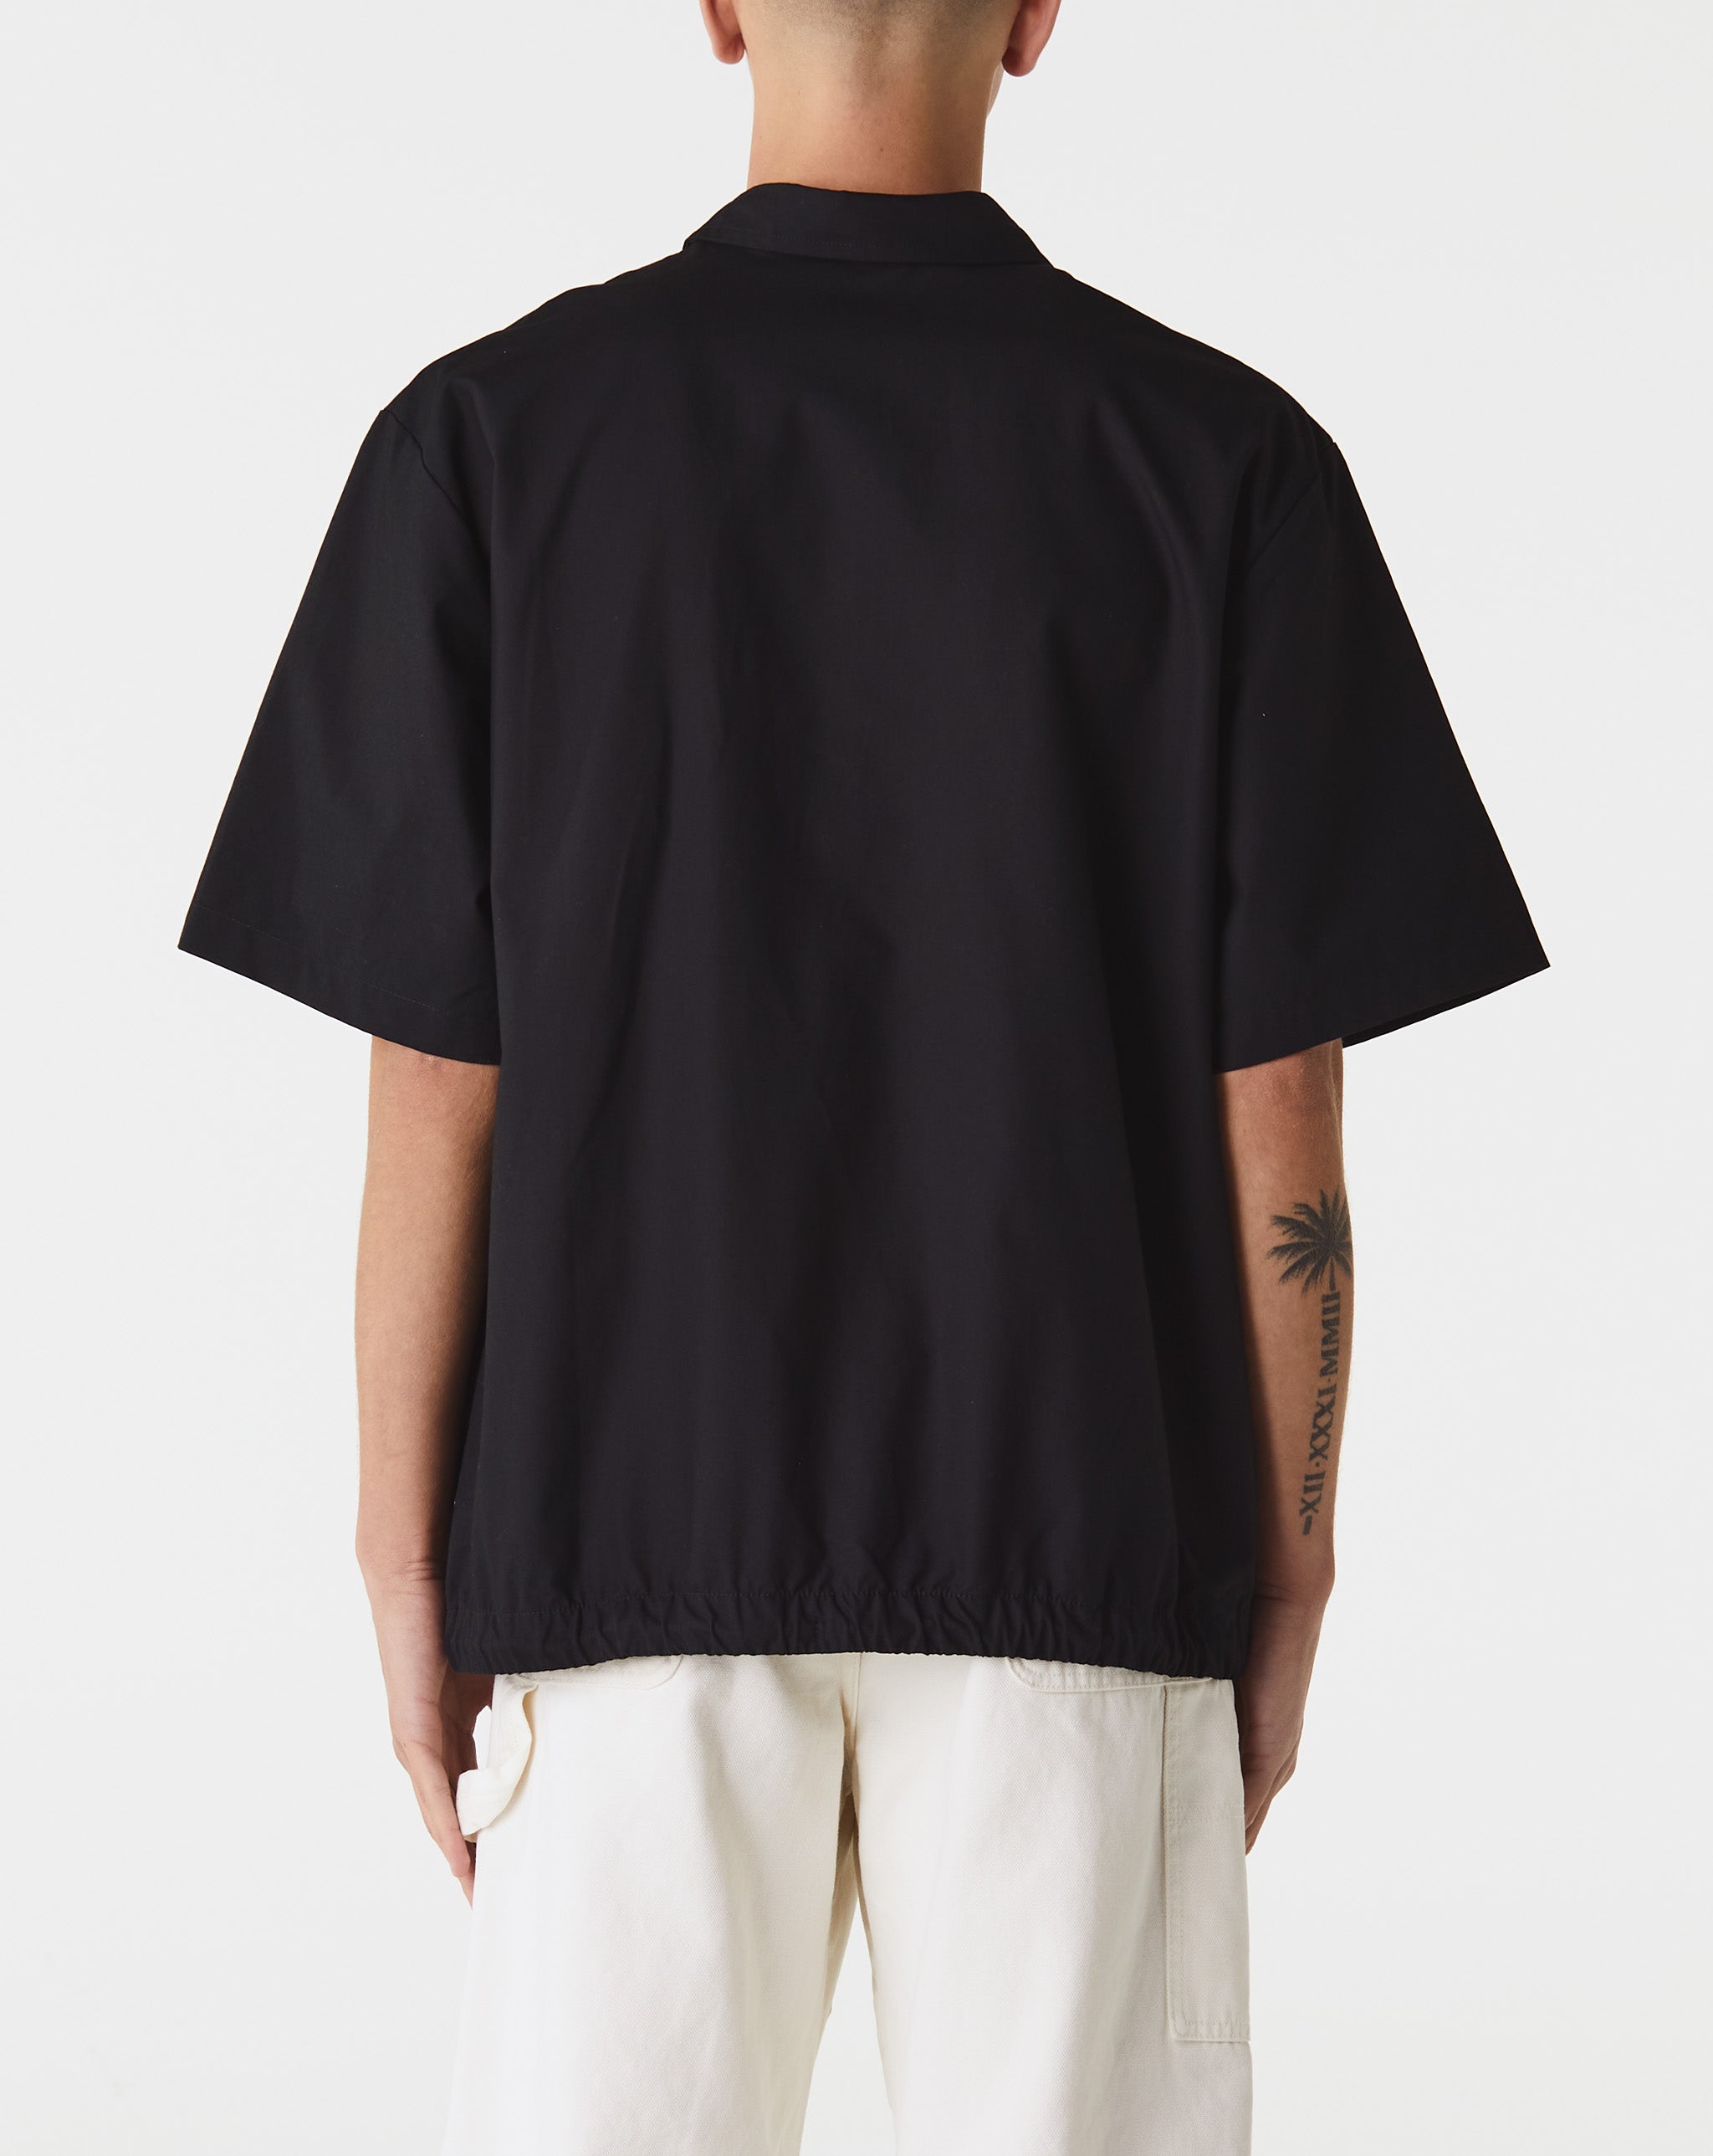 Nike Calvin Klein Jeans Big & Tall Grå t-shirt med smal passform och monogram-logga  - Cheap 127-0 Jordan outlet